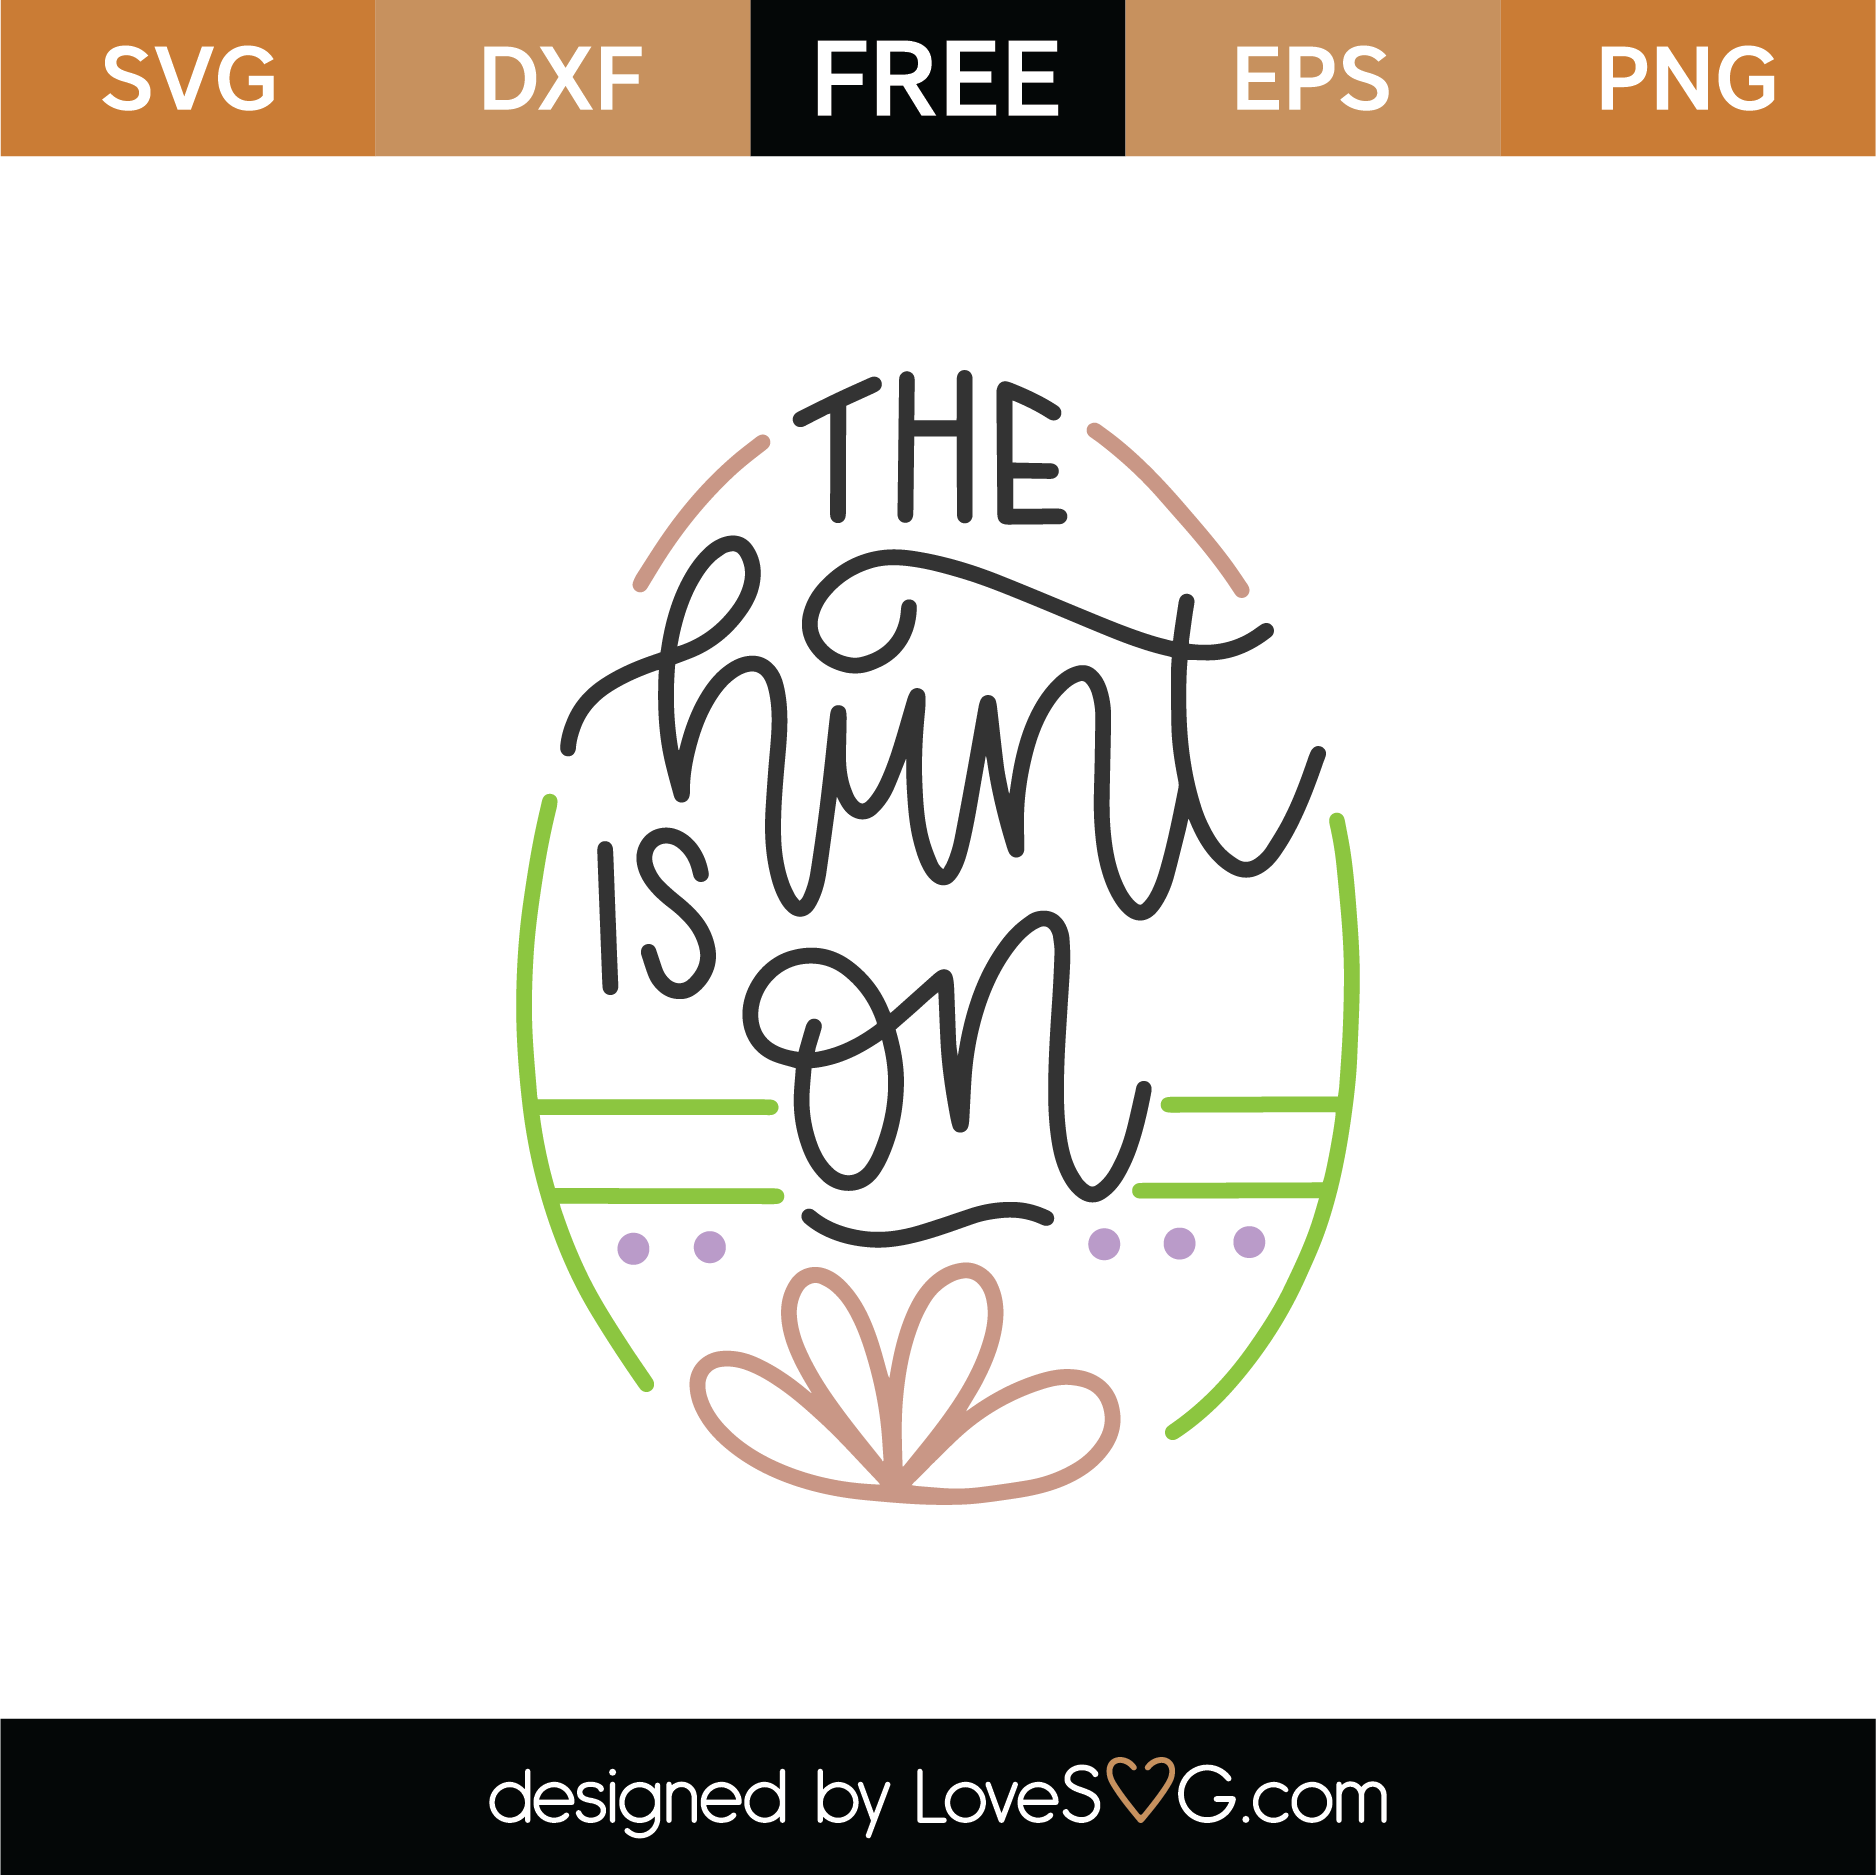 Download Free The Hunt Is On SVG Cut File | Lovesvg.com